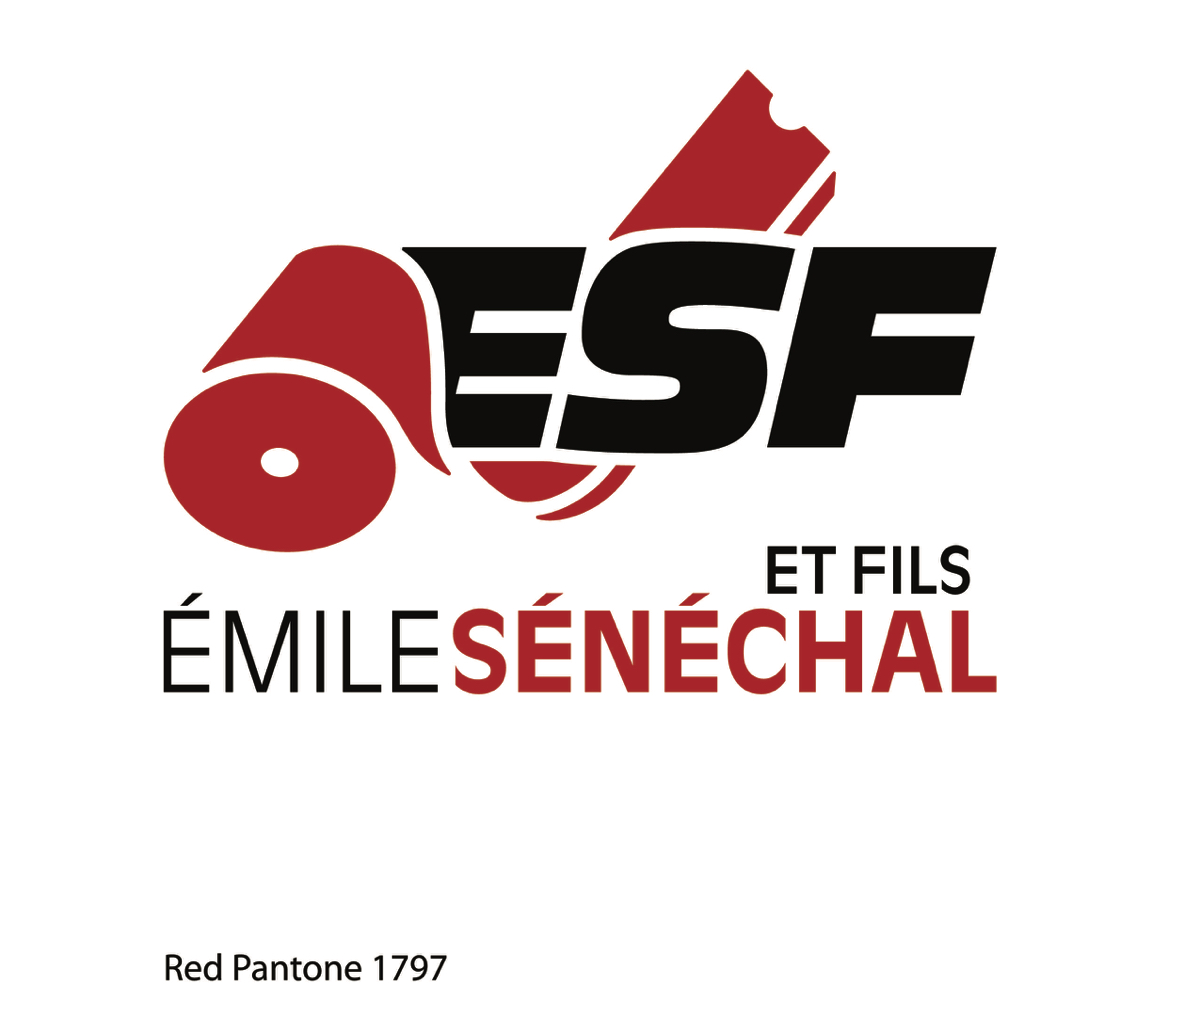 Self Assessment     Emile Senechal et Fils Ltee     Certification #PKG178616